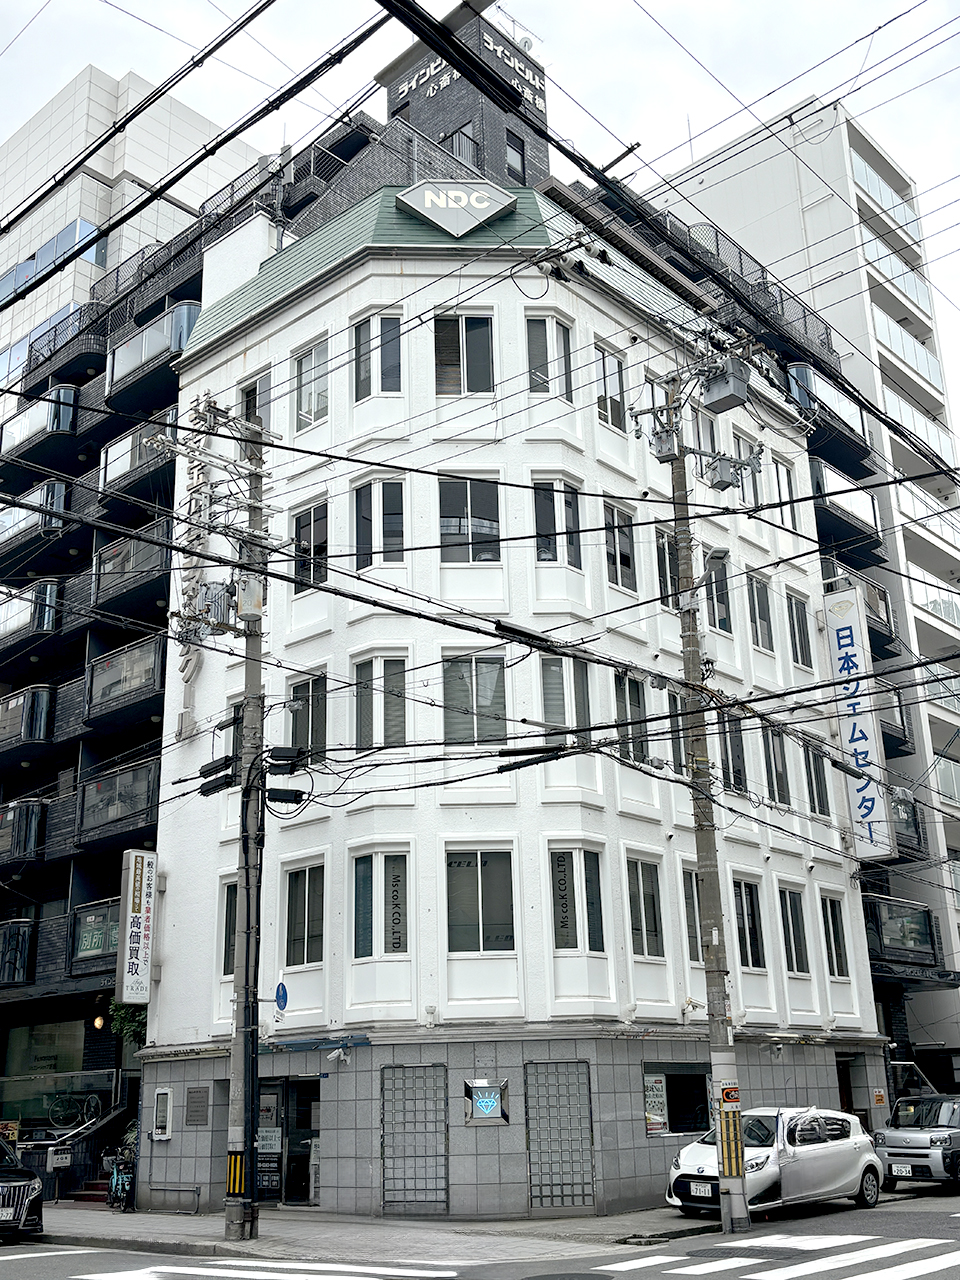 Japan Gem Centerbuilding